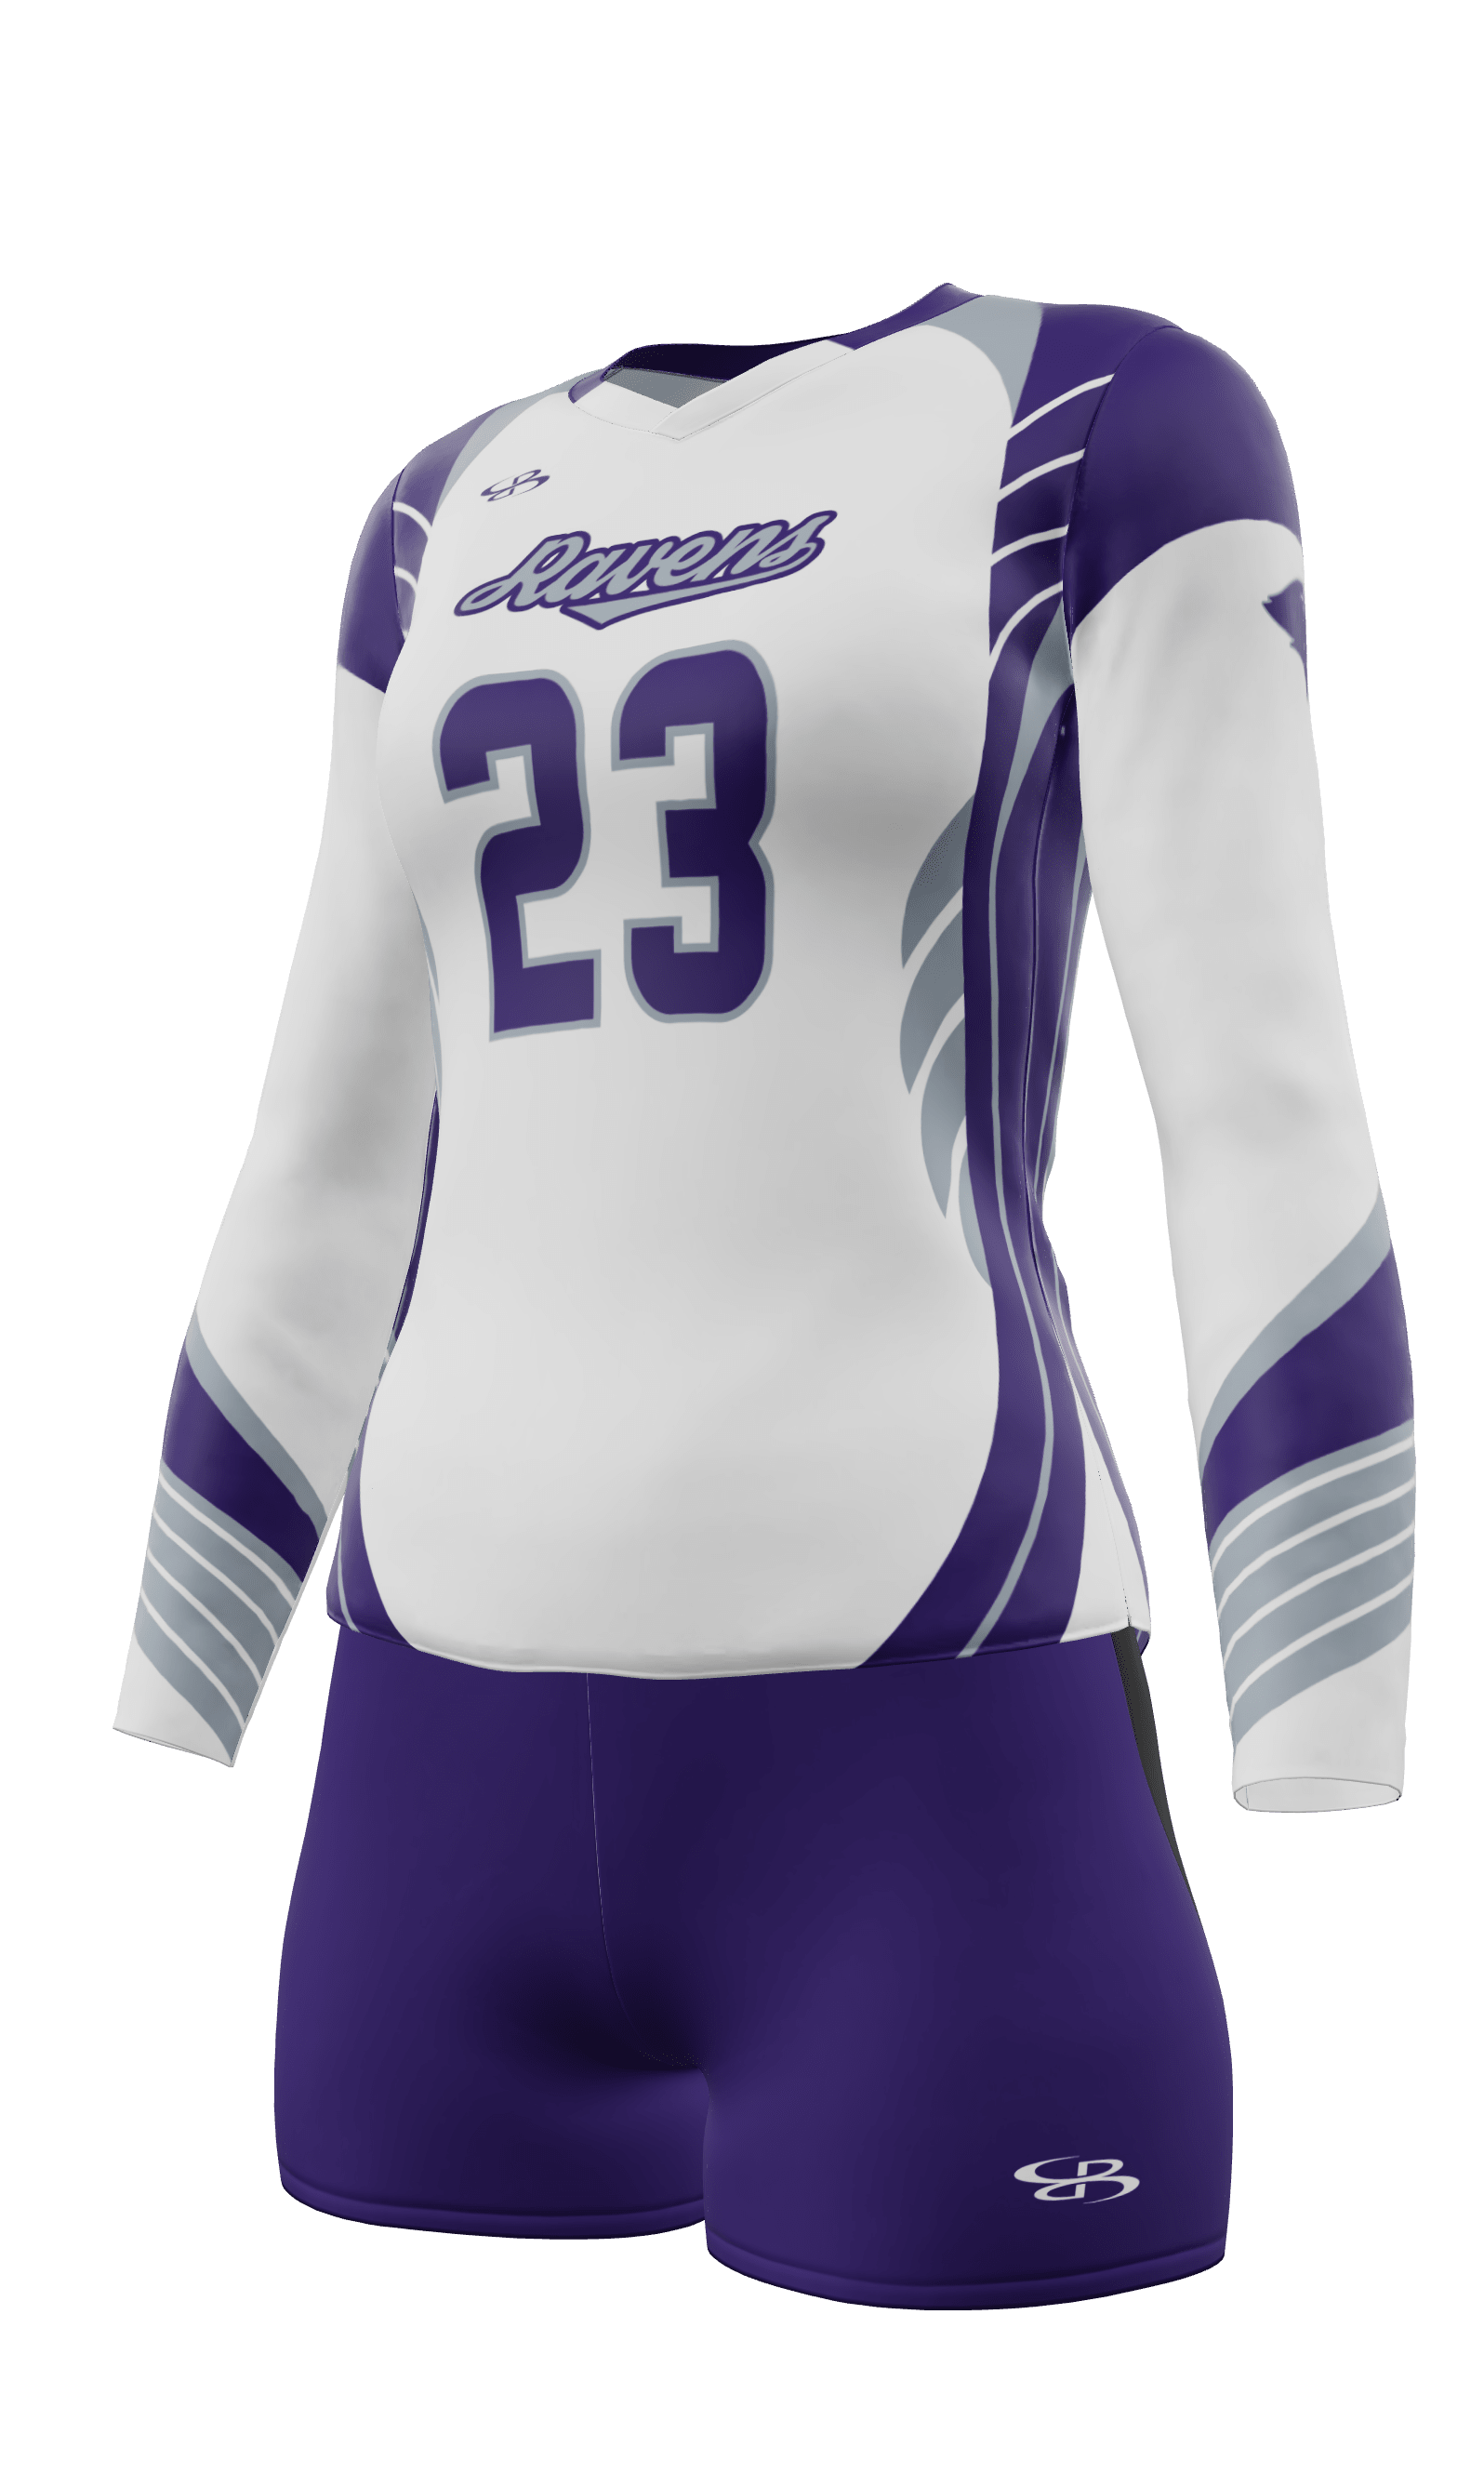 Custom Women's and Girls' Volleyball Uniforms & Equipment | Boombah